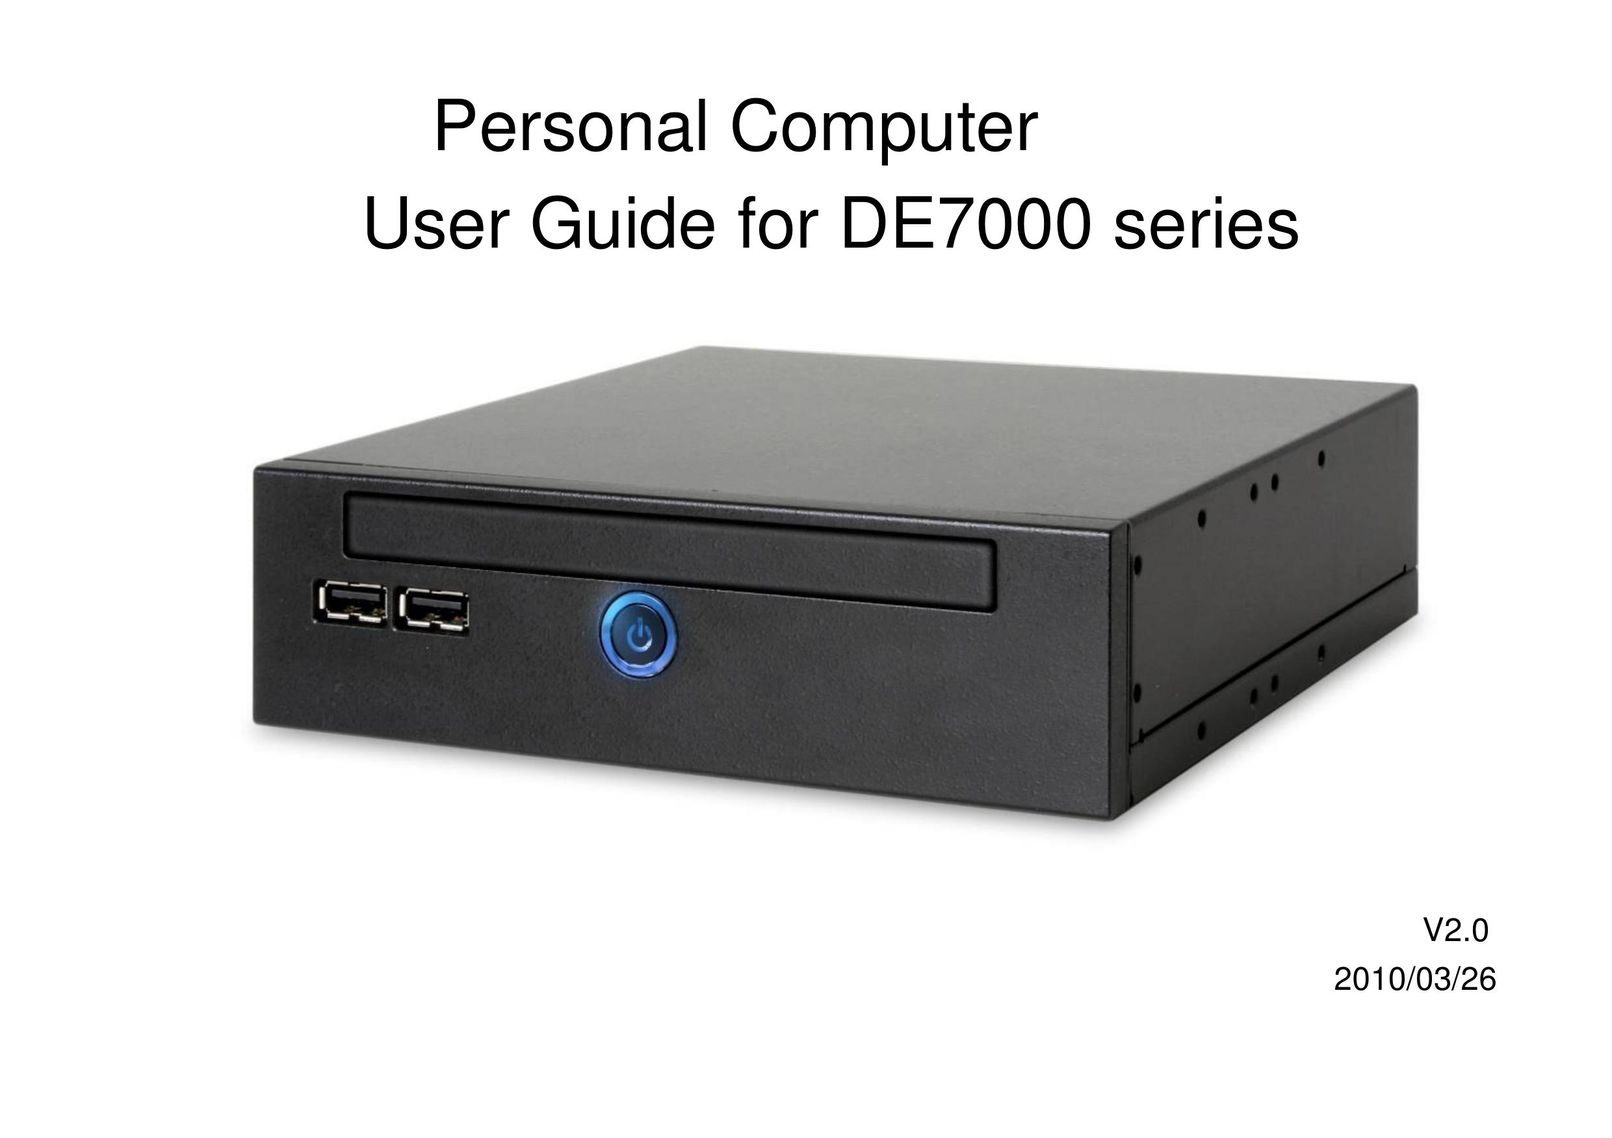 Panasonic DE7000 Personal Computer User Manual